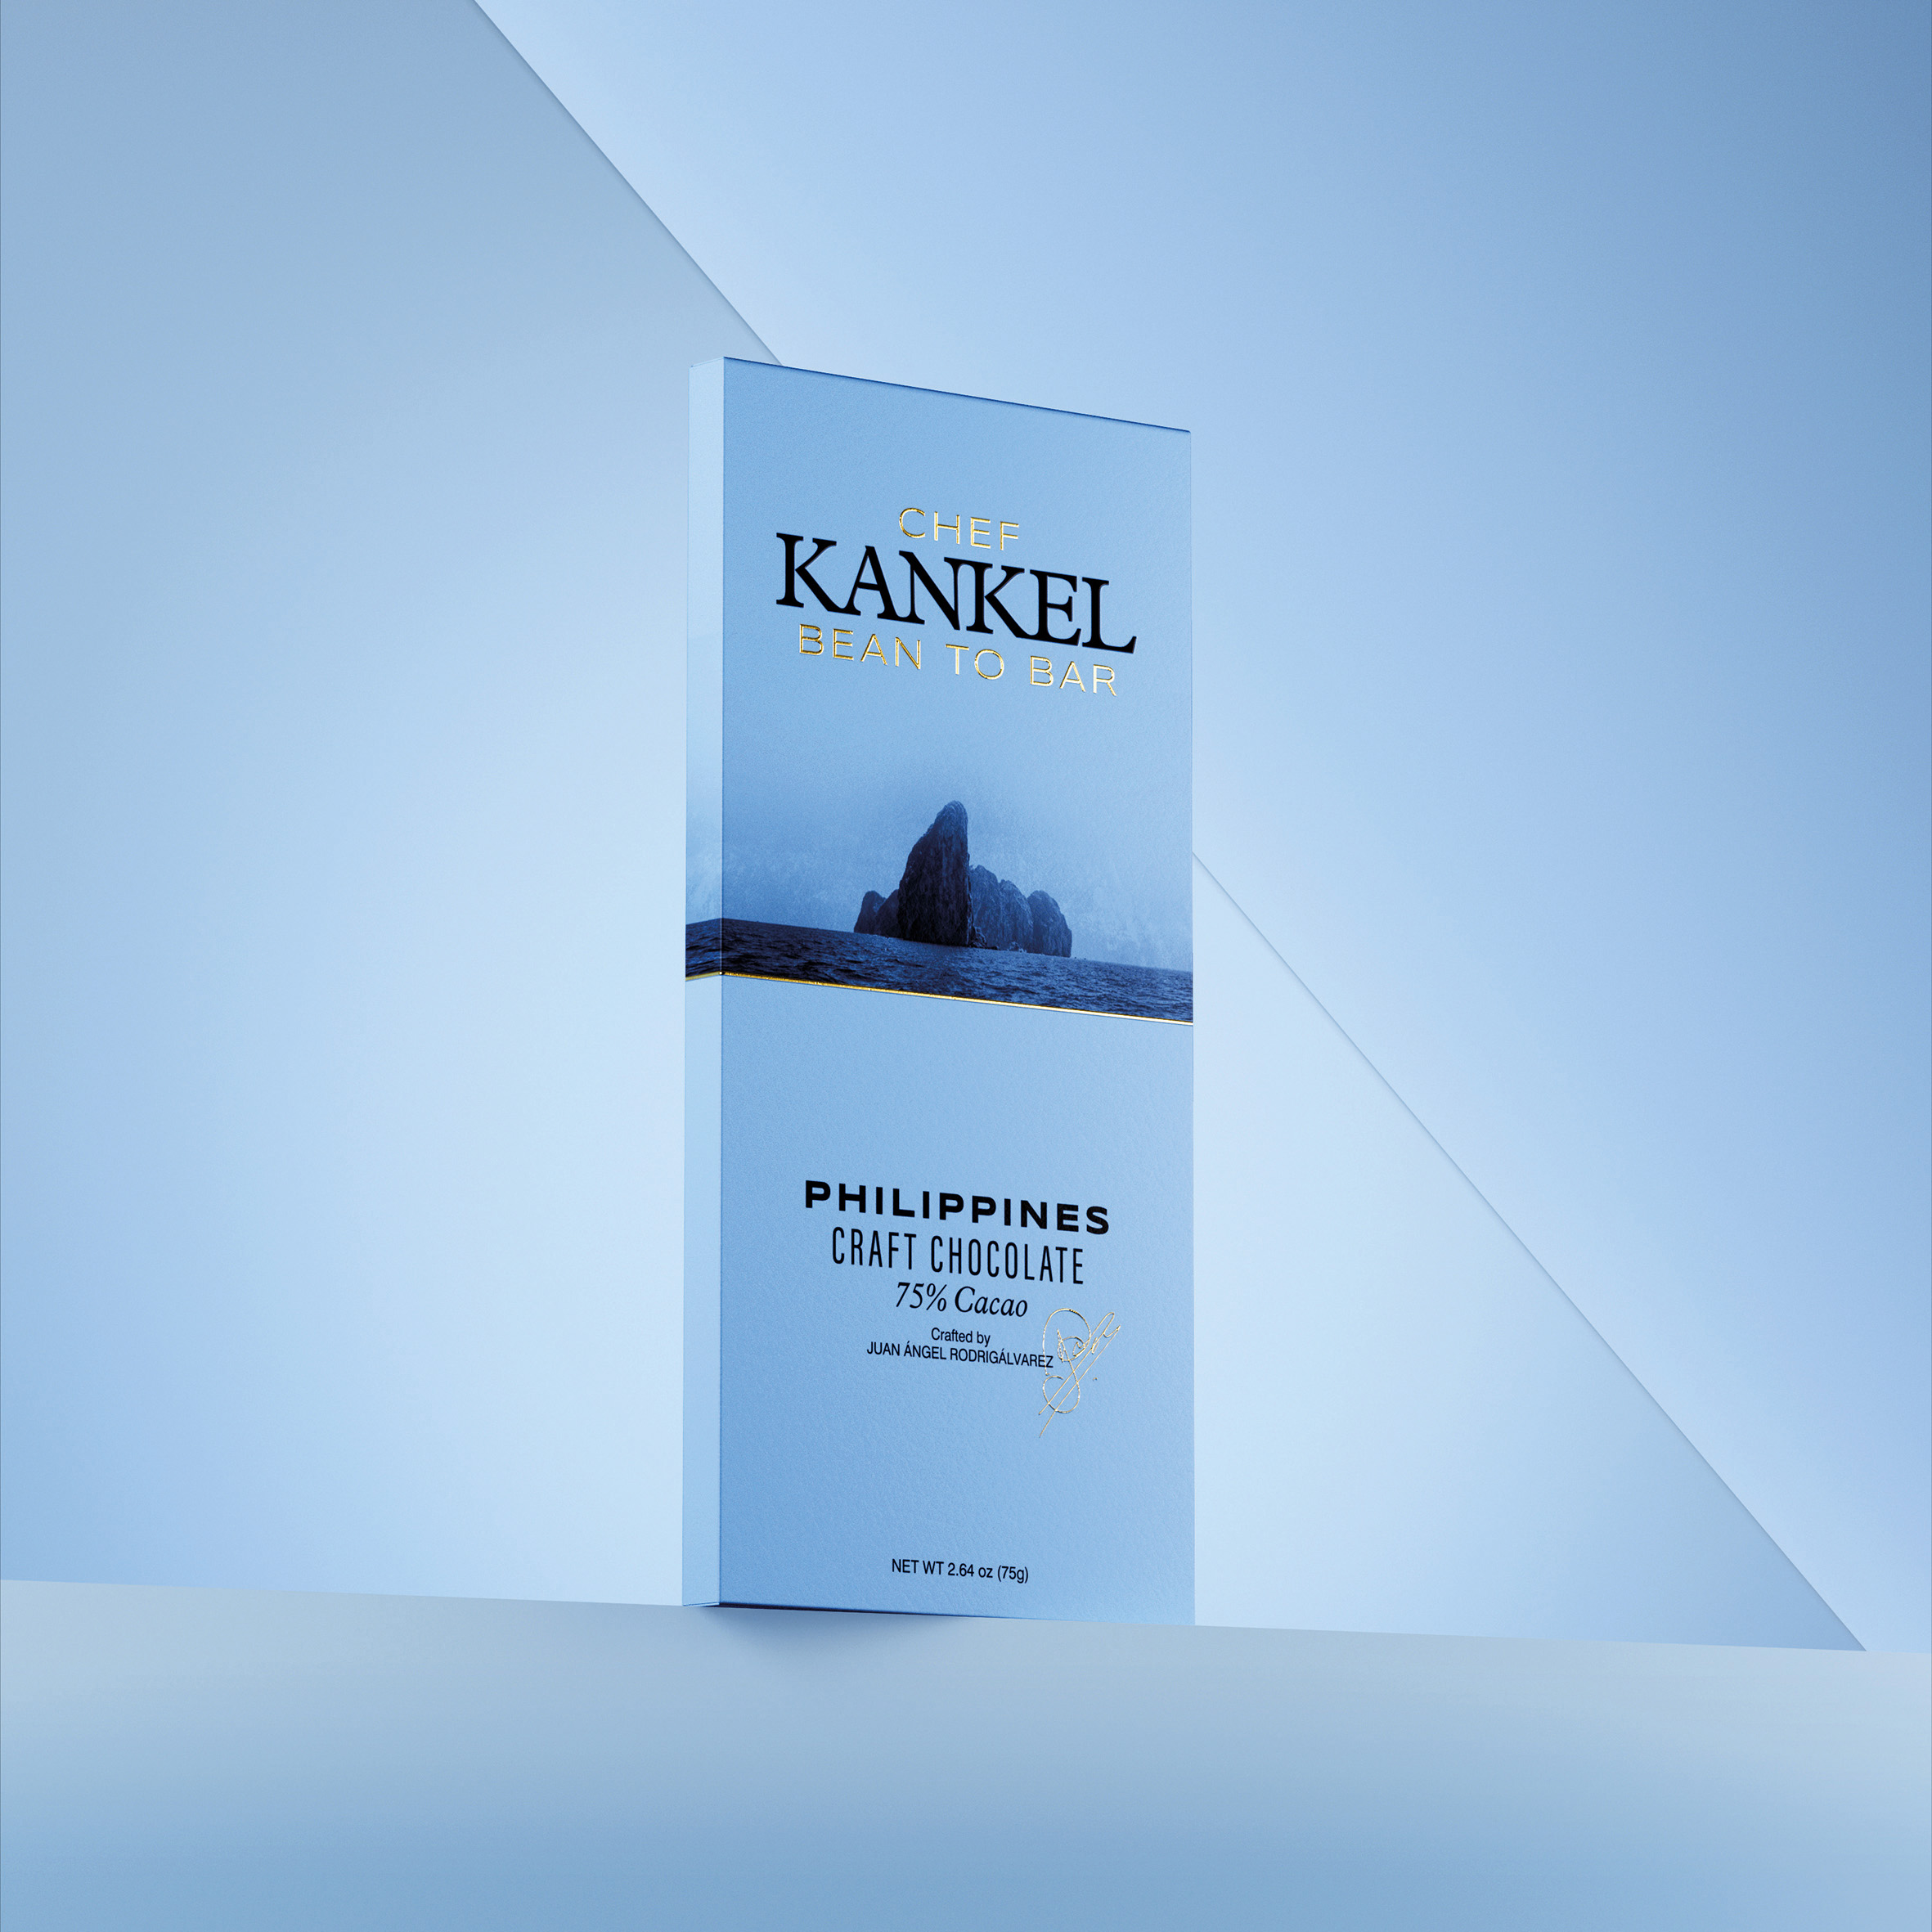 Kankel Cacao Packaging Design – Taking Us Back to the Origins